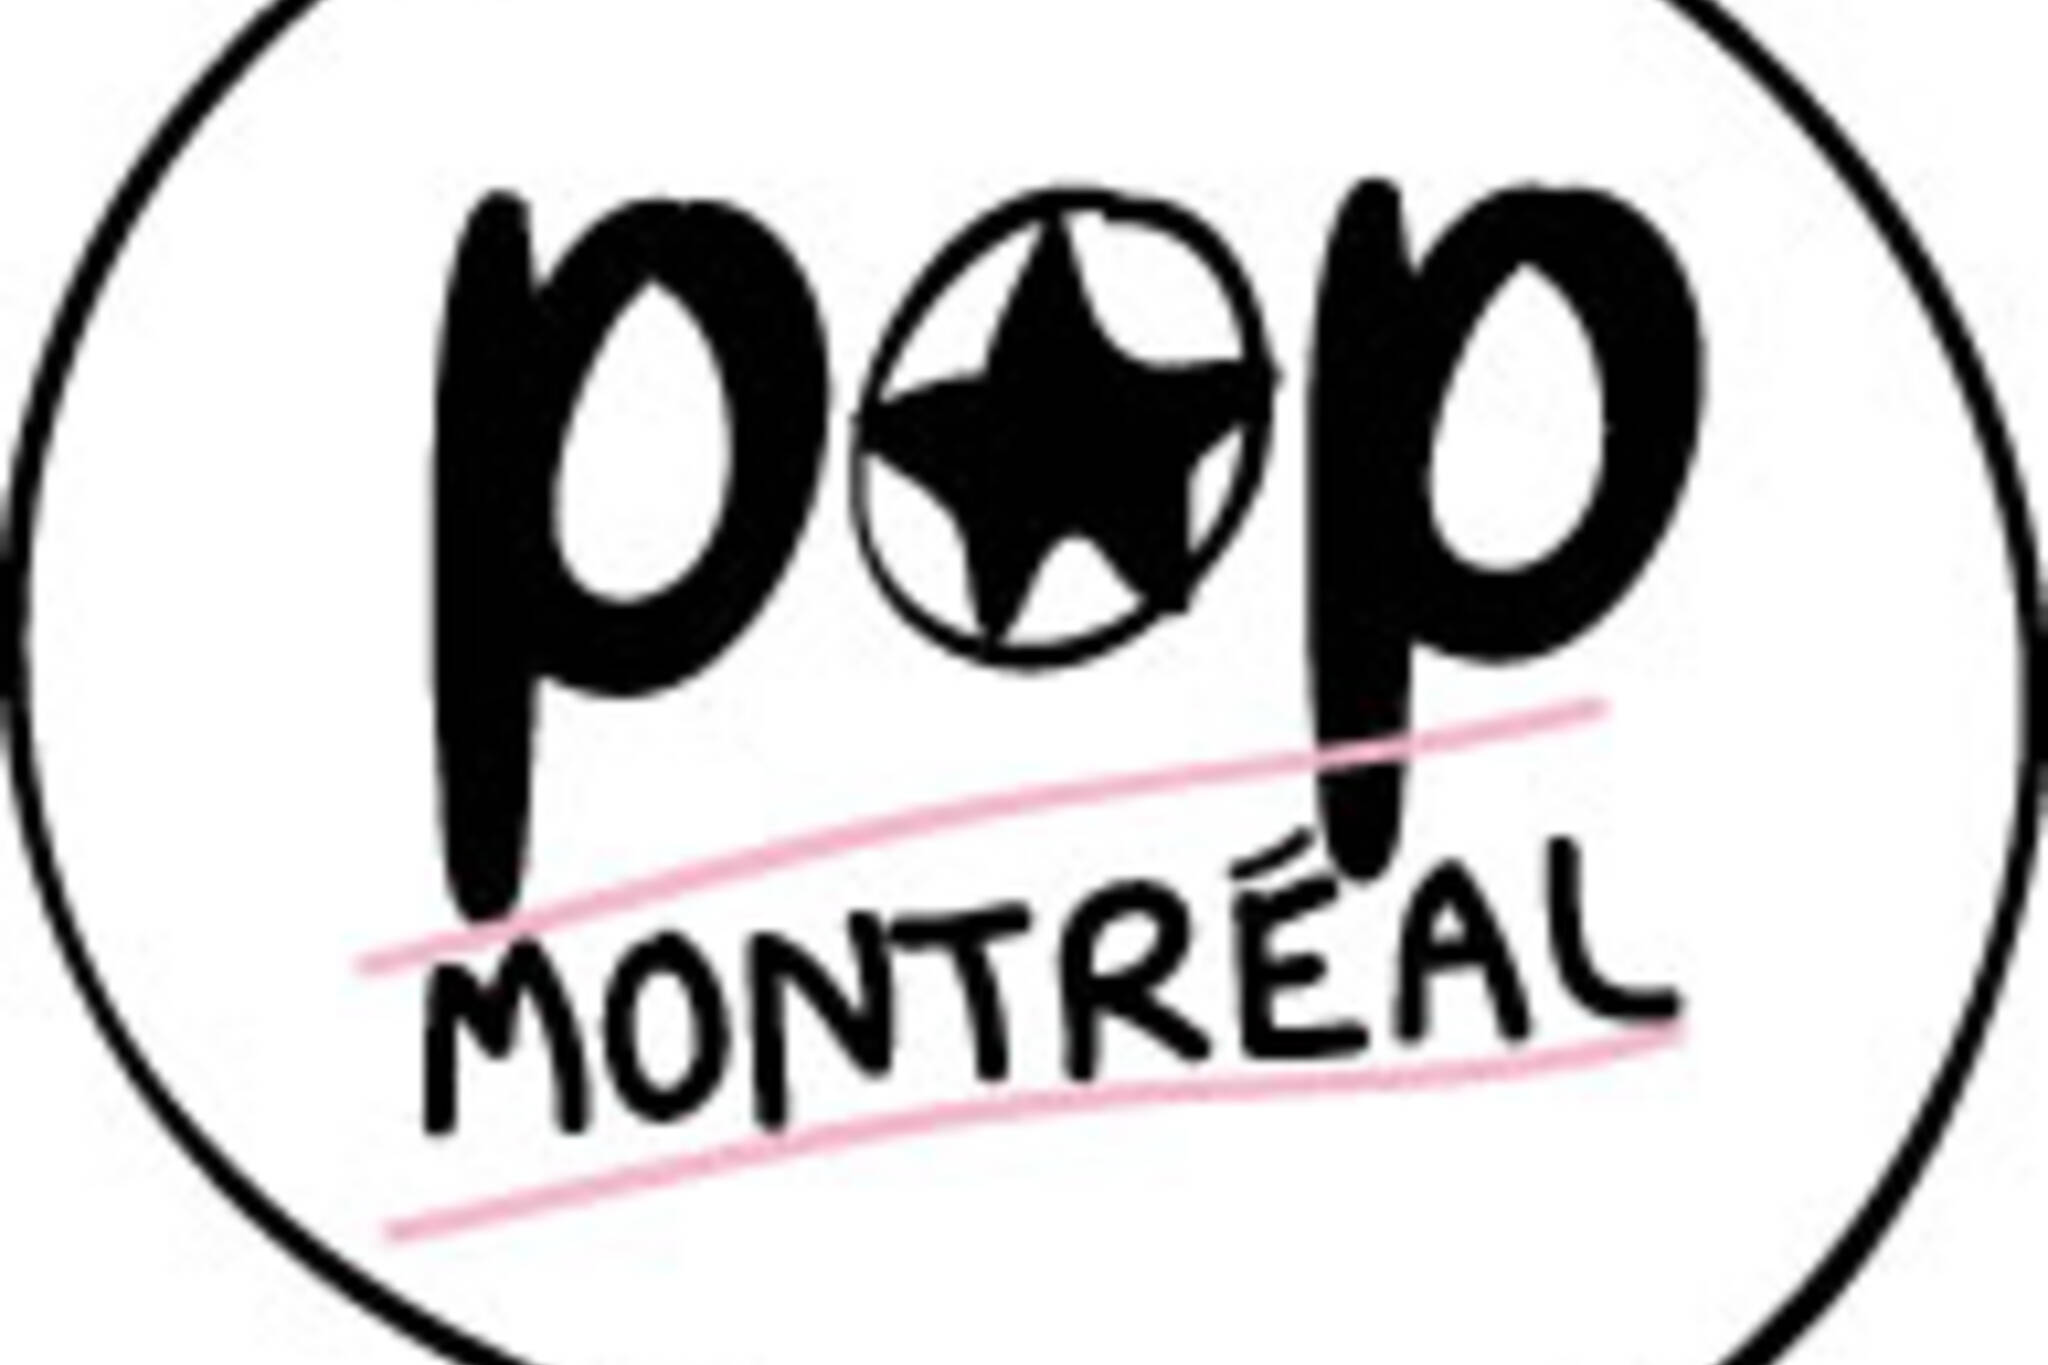 Pop Montreal